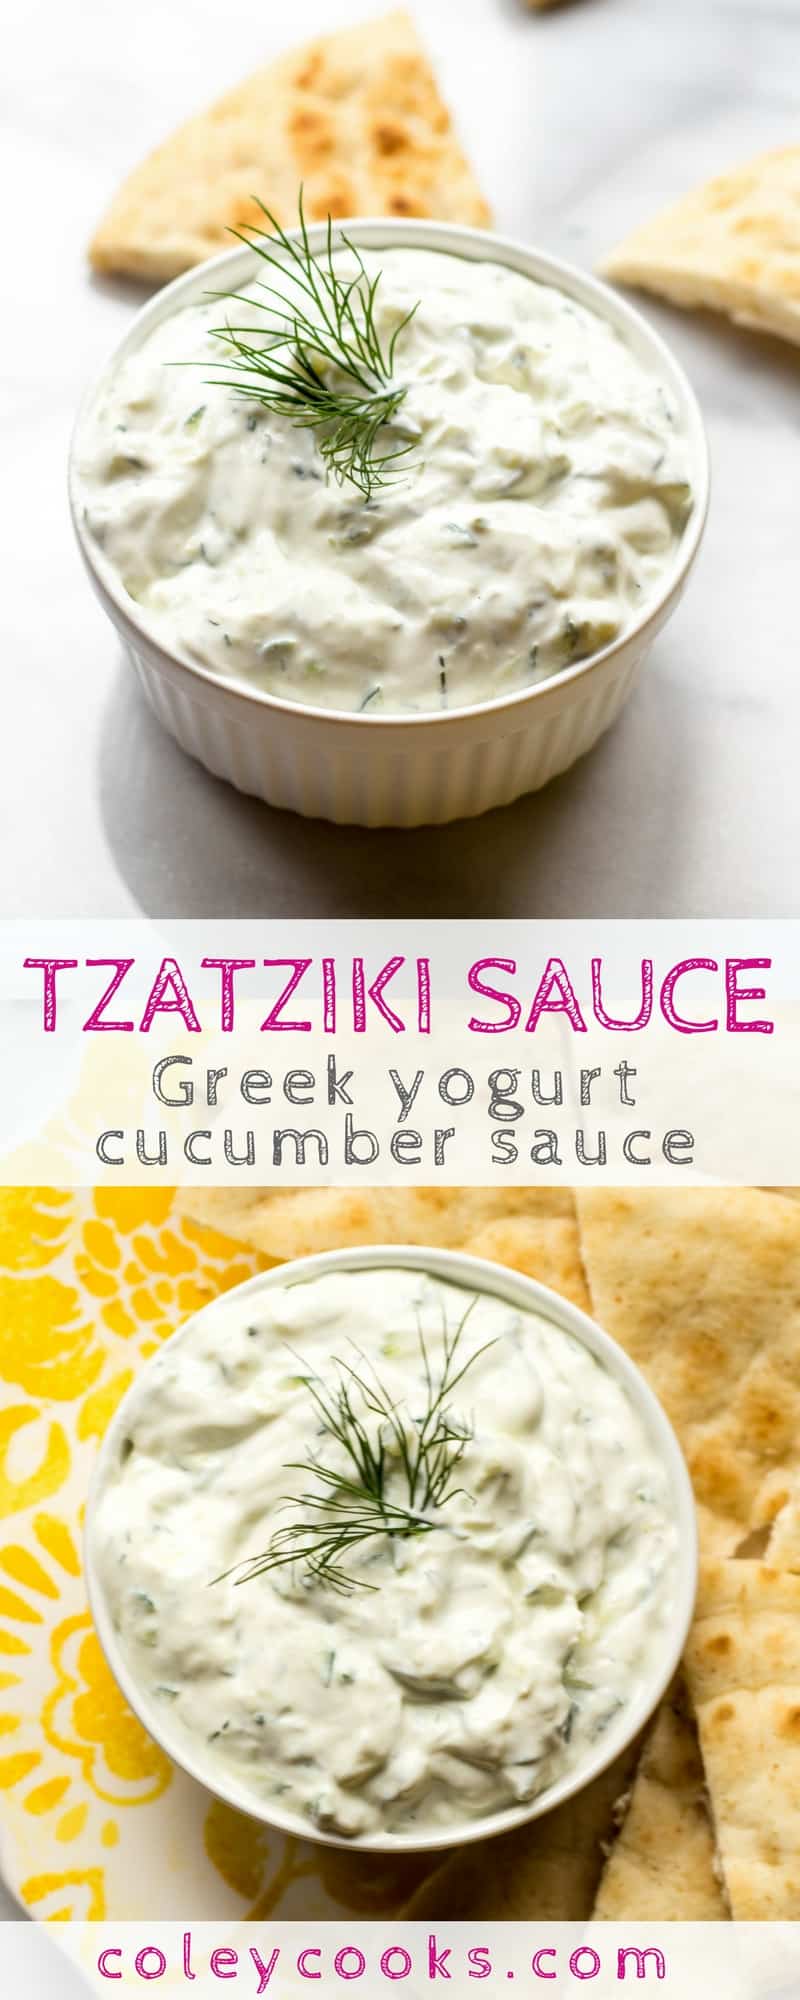 TZATZIKI SAUCE | Easy recipe for Greek yogurt cucumber sauce Tzatziki! Creamy, refreshing, and wonderful with pita, on gyros, souvlaki, falafel, or your favorite Greek recipe! #glutenfree #vegetarian | ColeyCooks.com